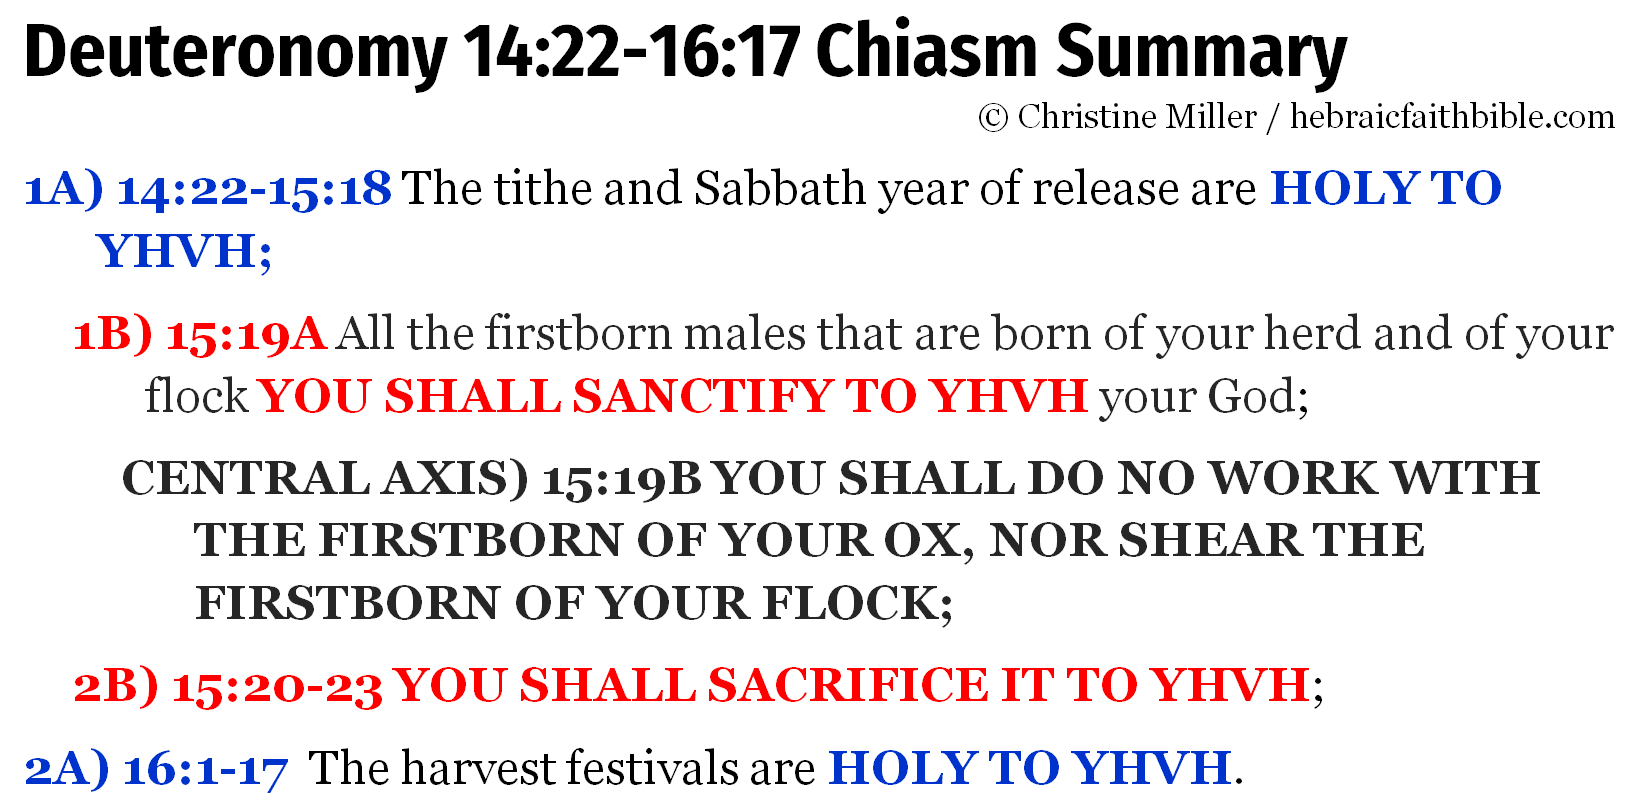 Deu 14:22-16:17 chiasm summary | hebraicfaithbible.com